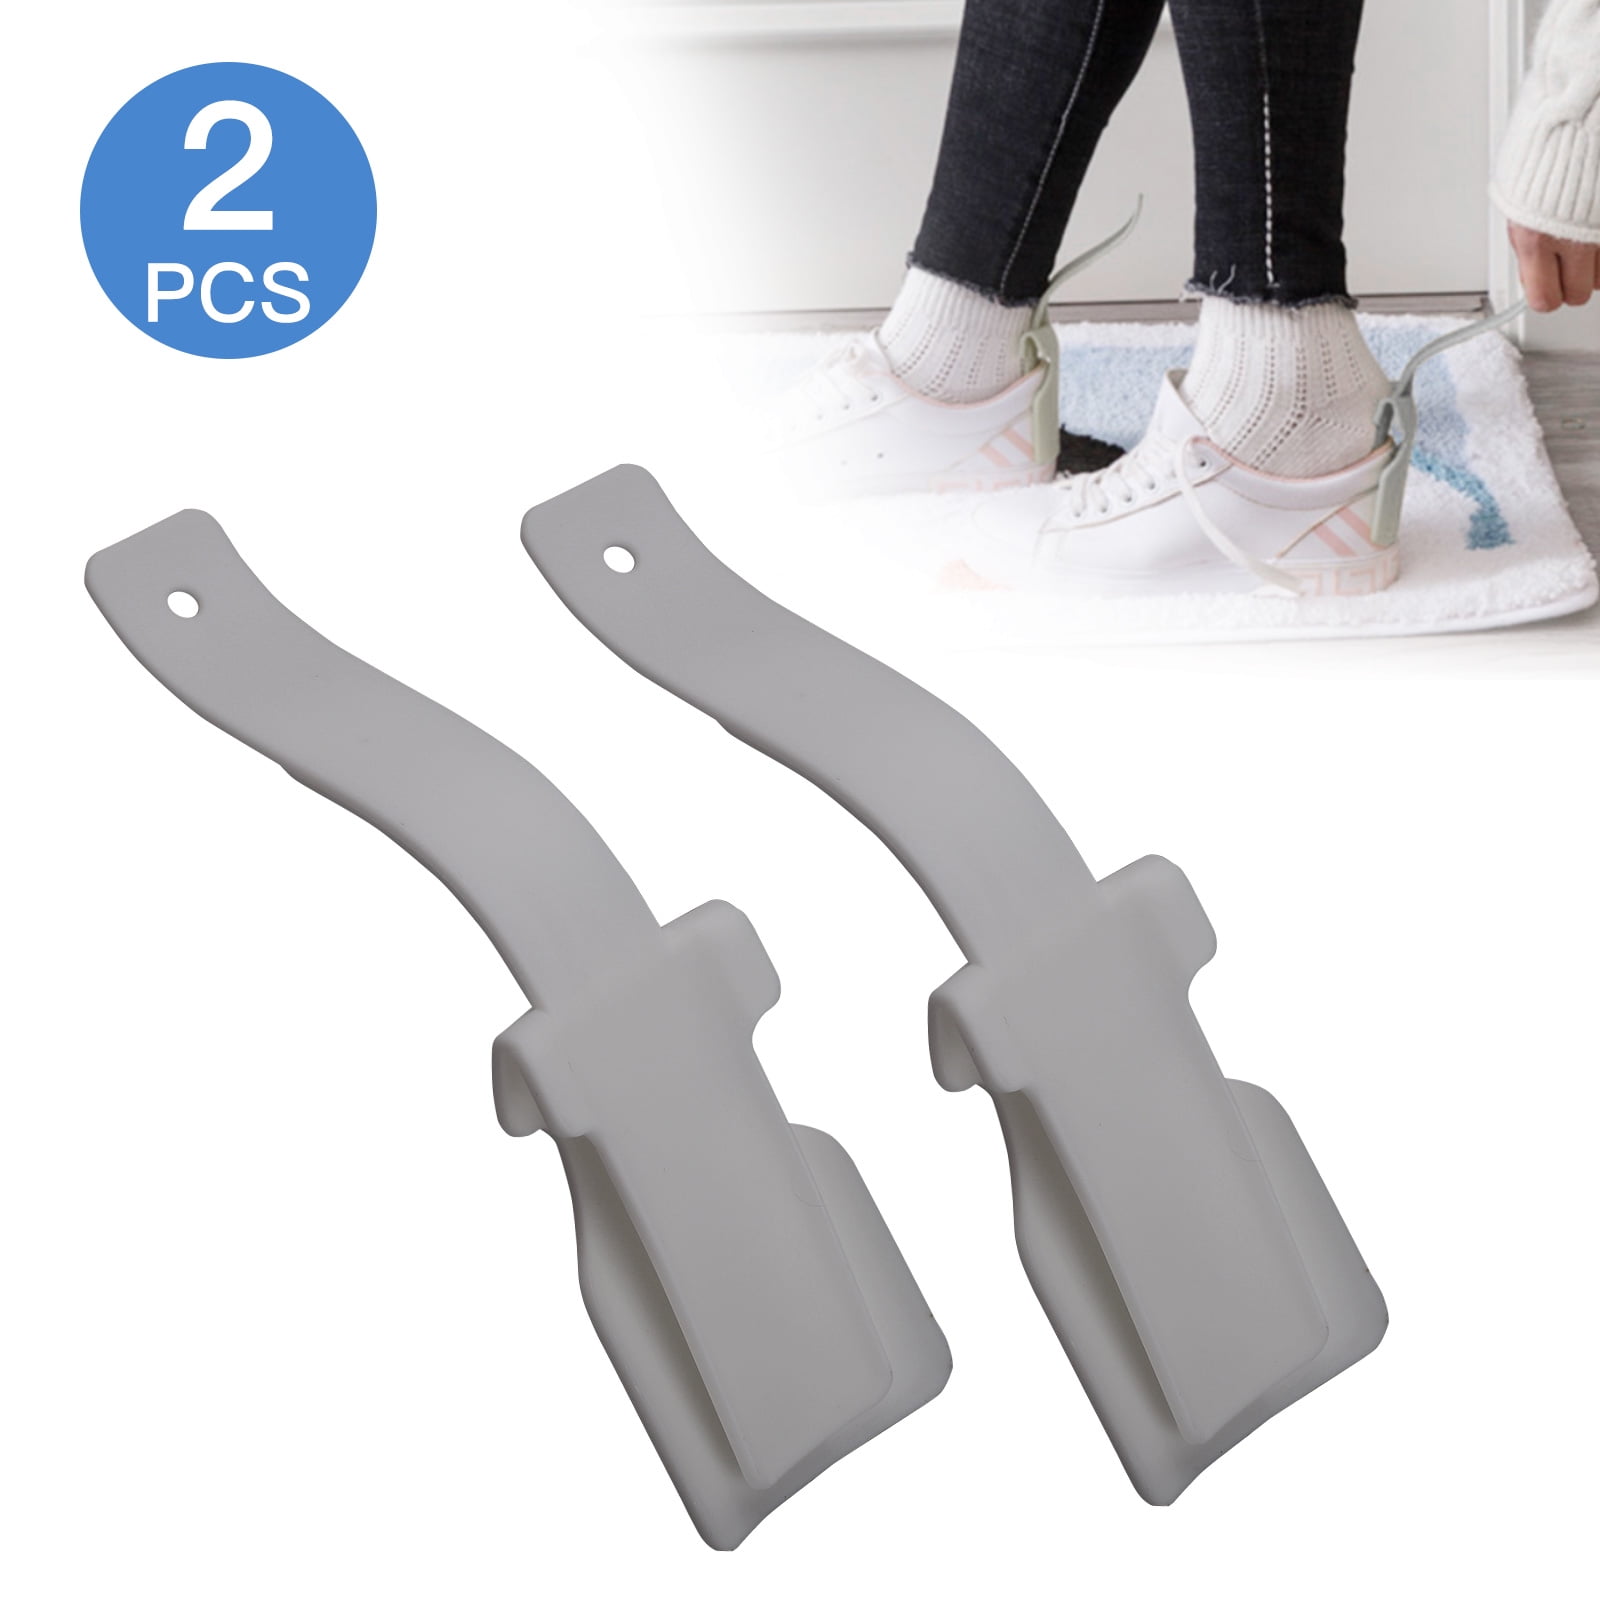 2020 New Shoe Support Portable Sock Slider Fits for All Shoes Pink, 4PC Lazy Shoe Helper,Handled Shoe Horn Shoe Lifting Helper,Easy on Easy Off Plastic Shoehorn for Men,Women & Kids 